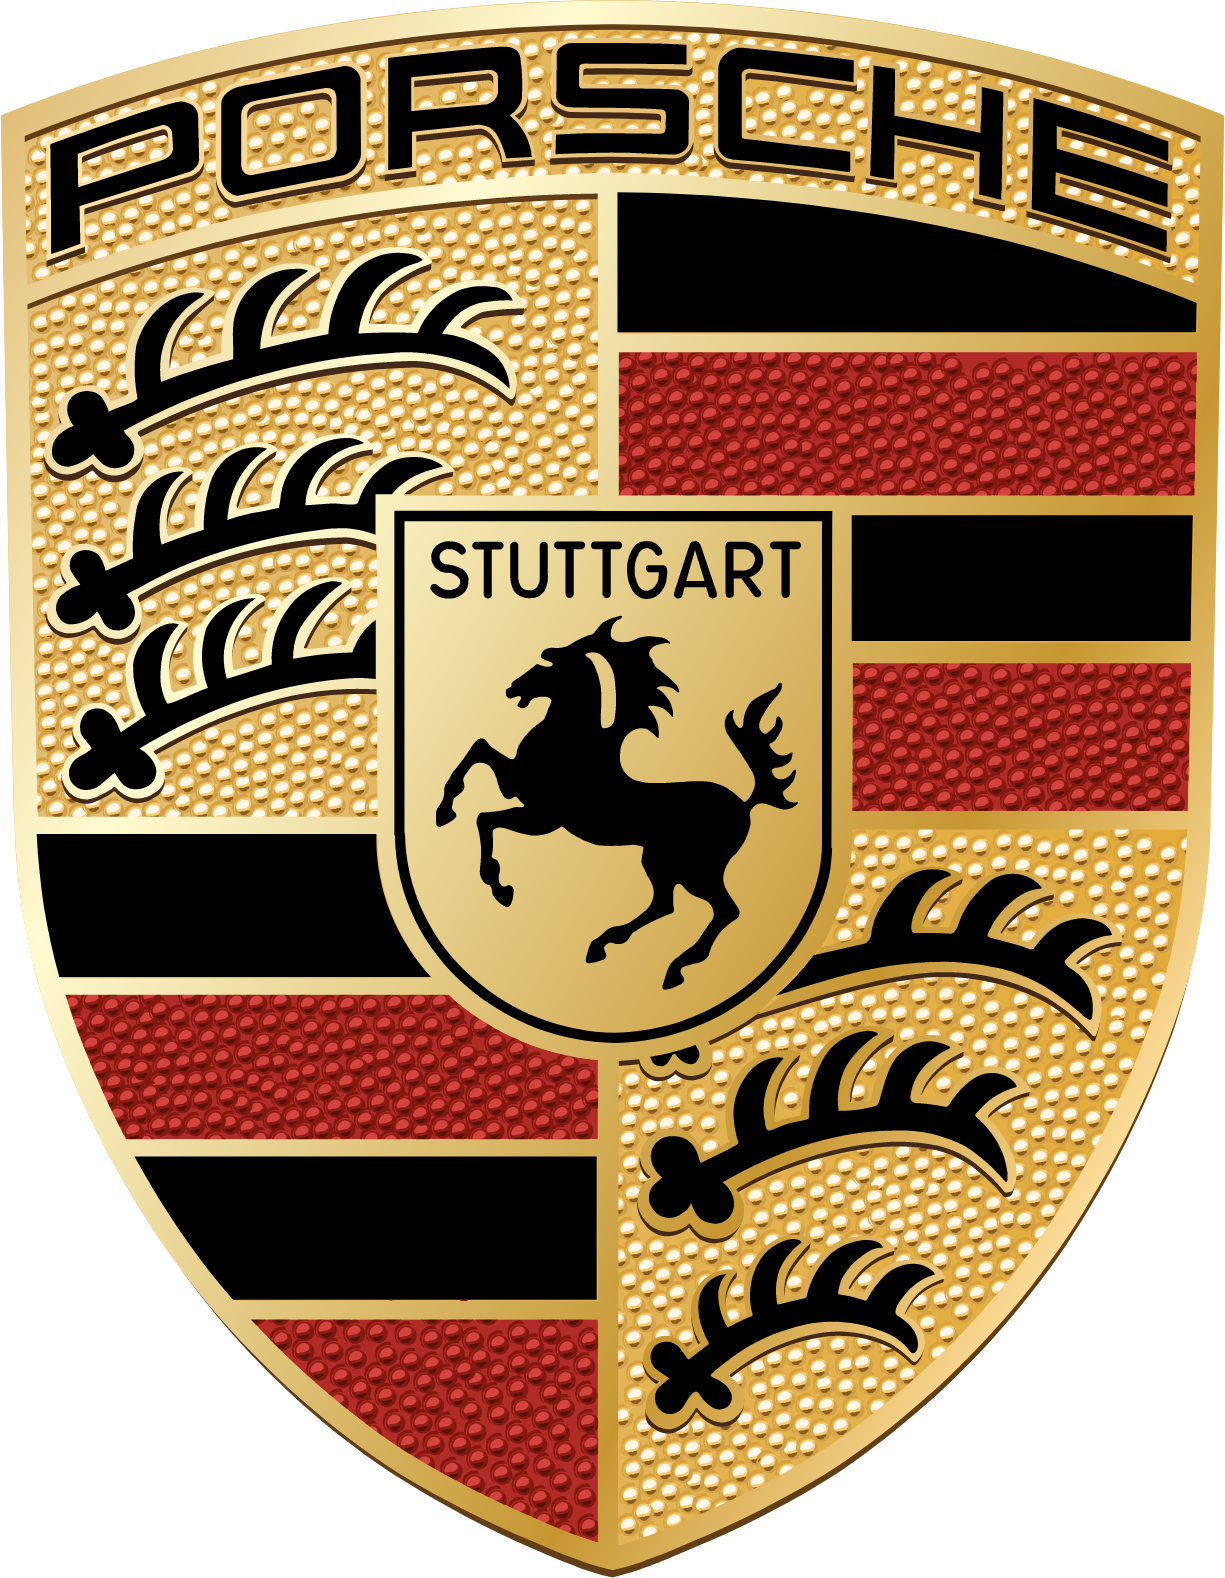 Porsche logo in transparent PNG format